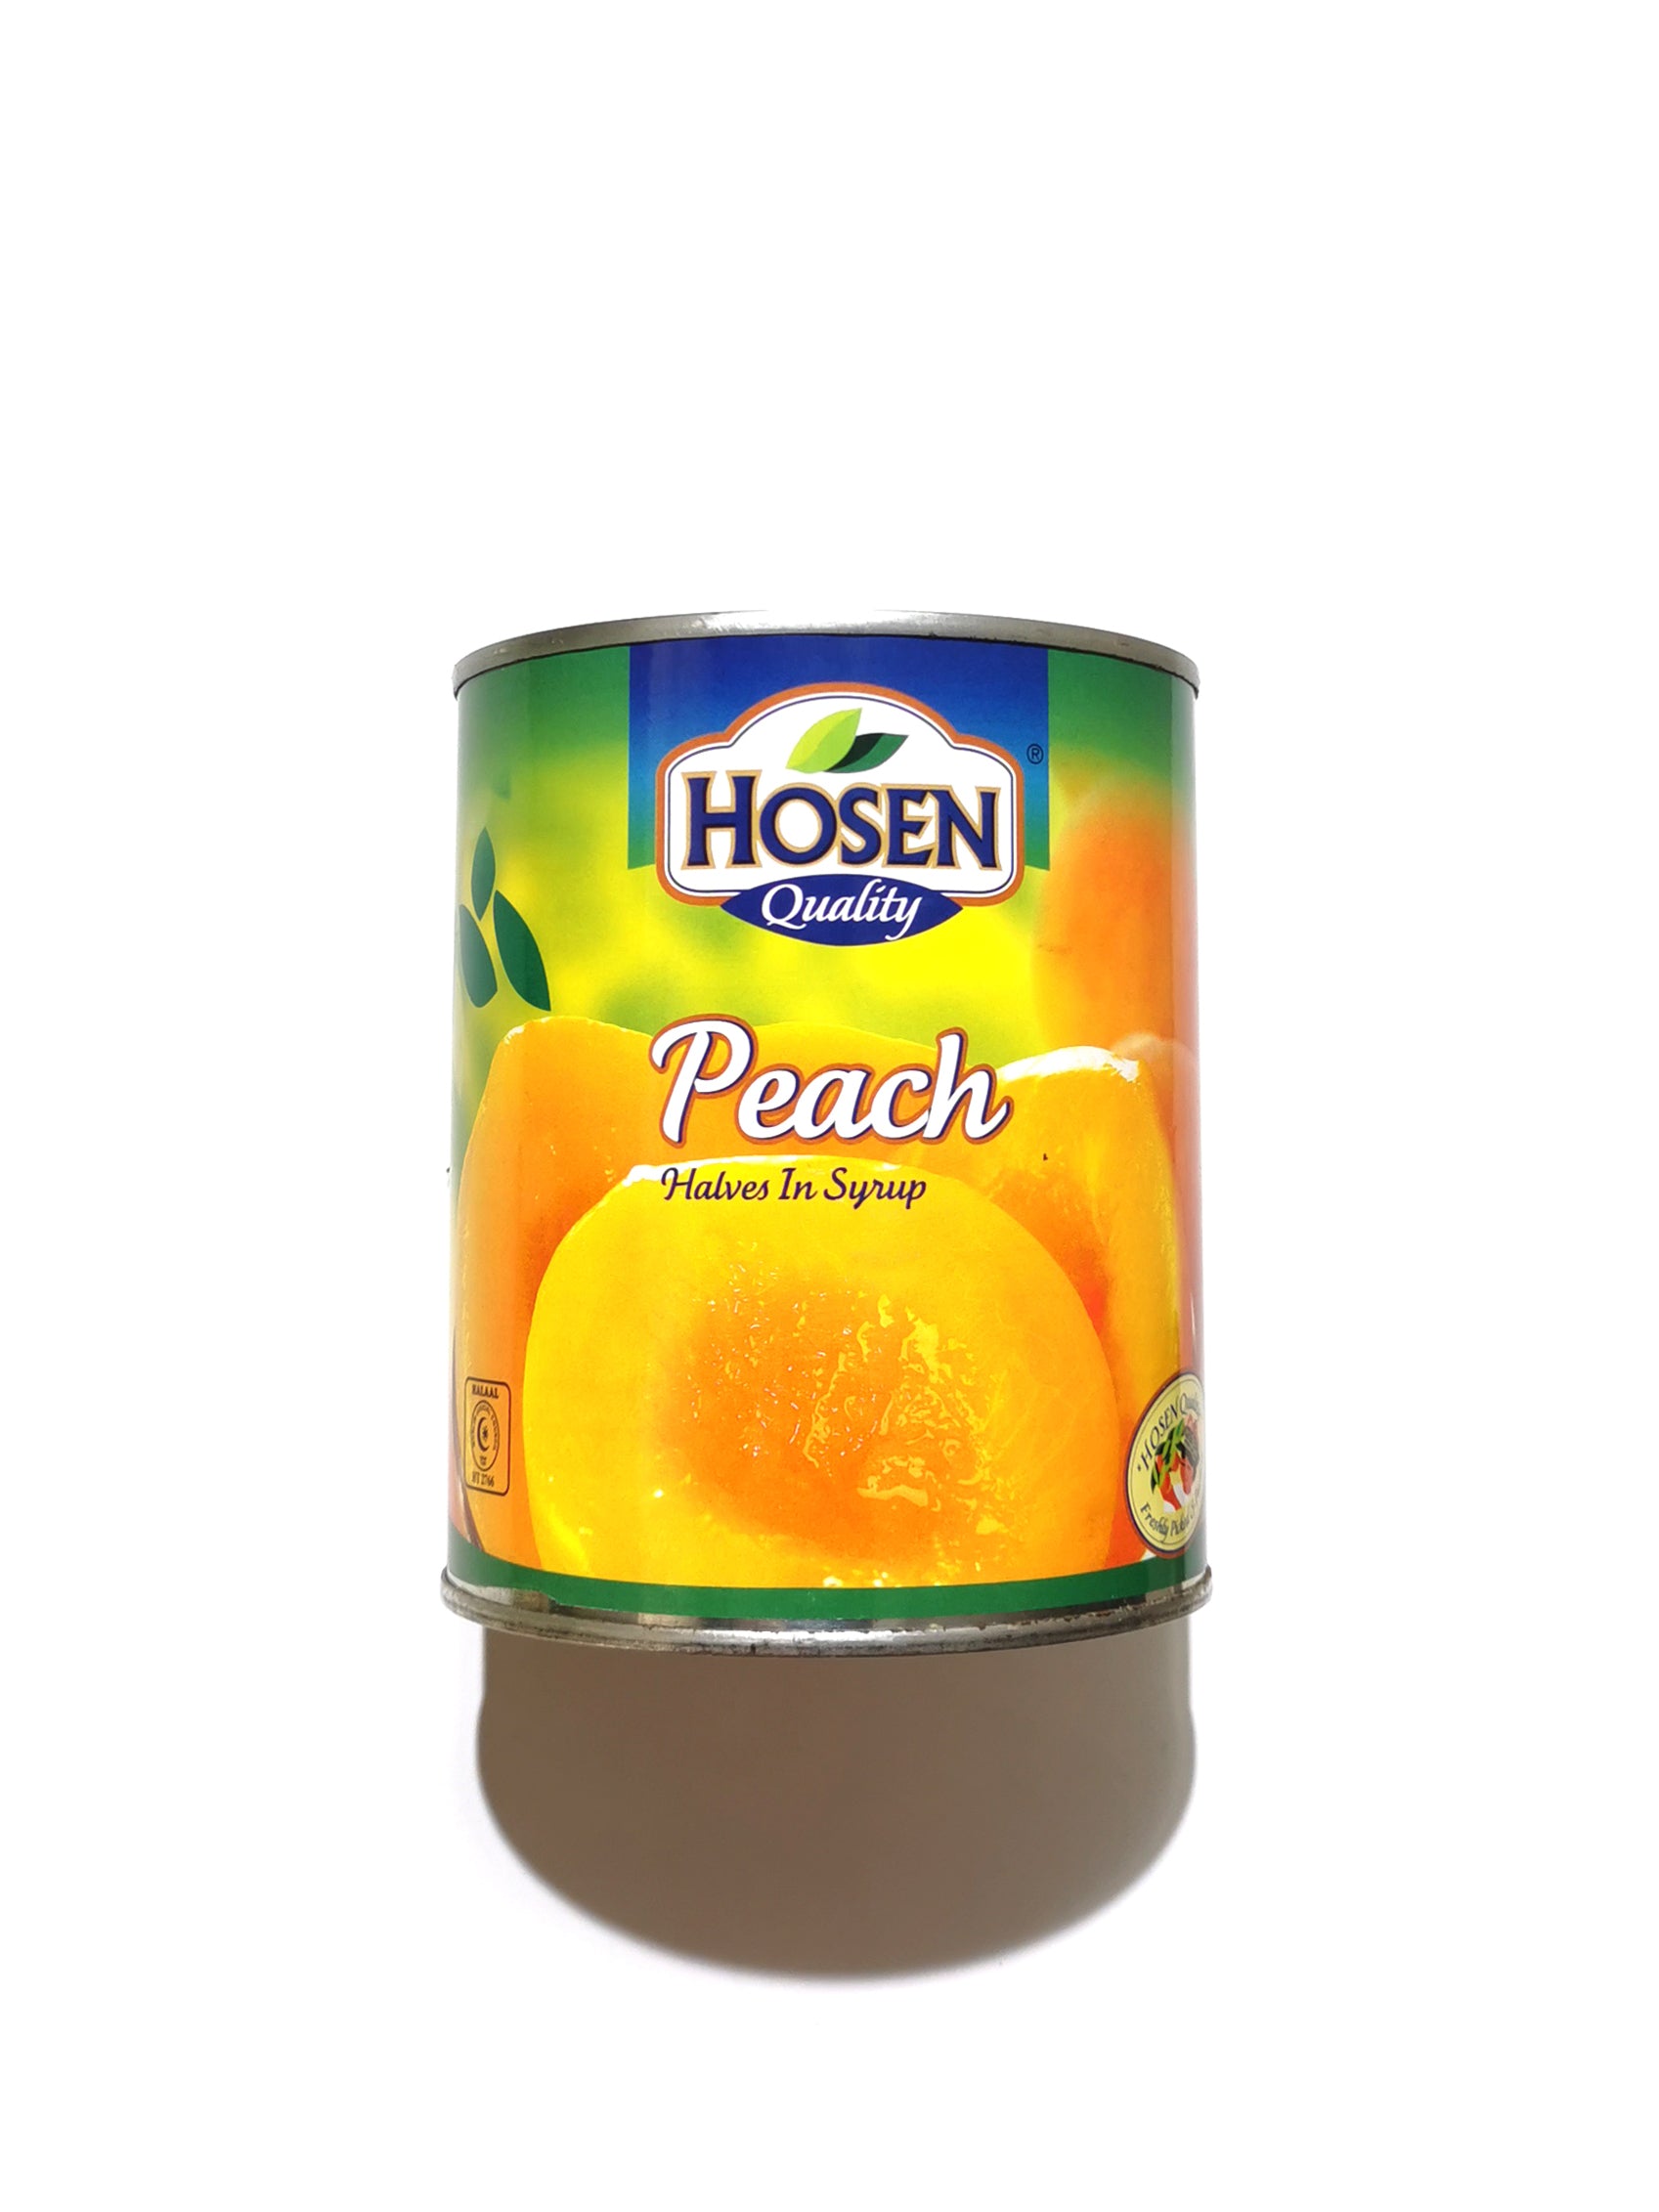 Hosen Peach Halves in Syrup 好顺糖漿桃果 - 825g